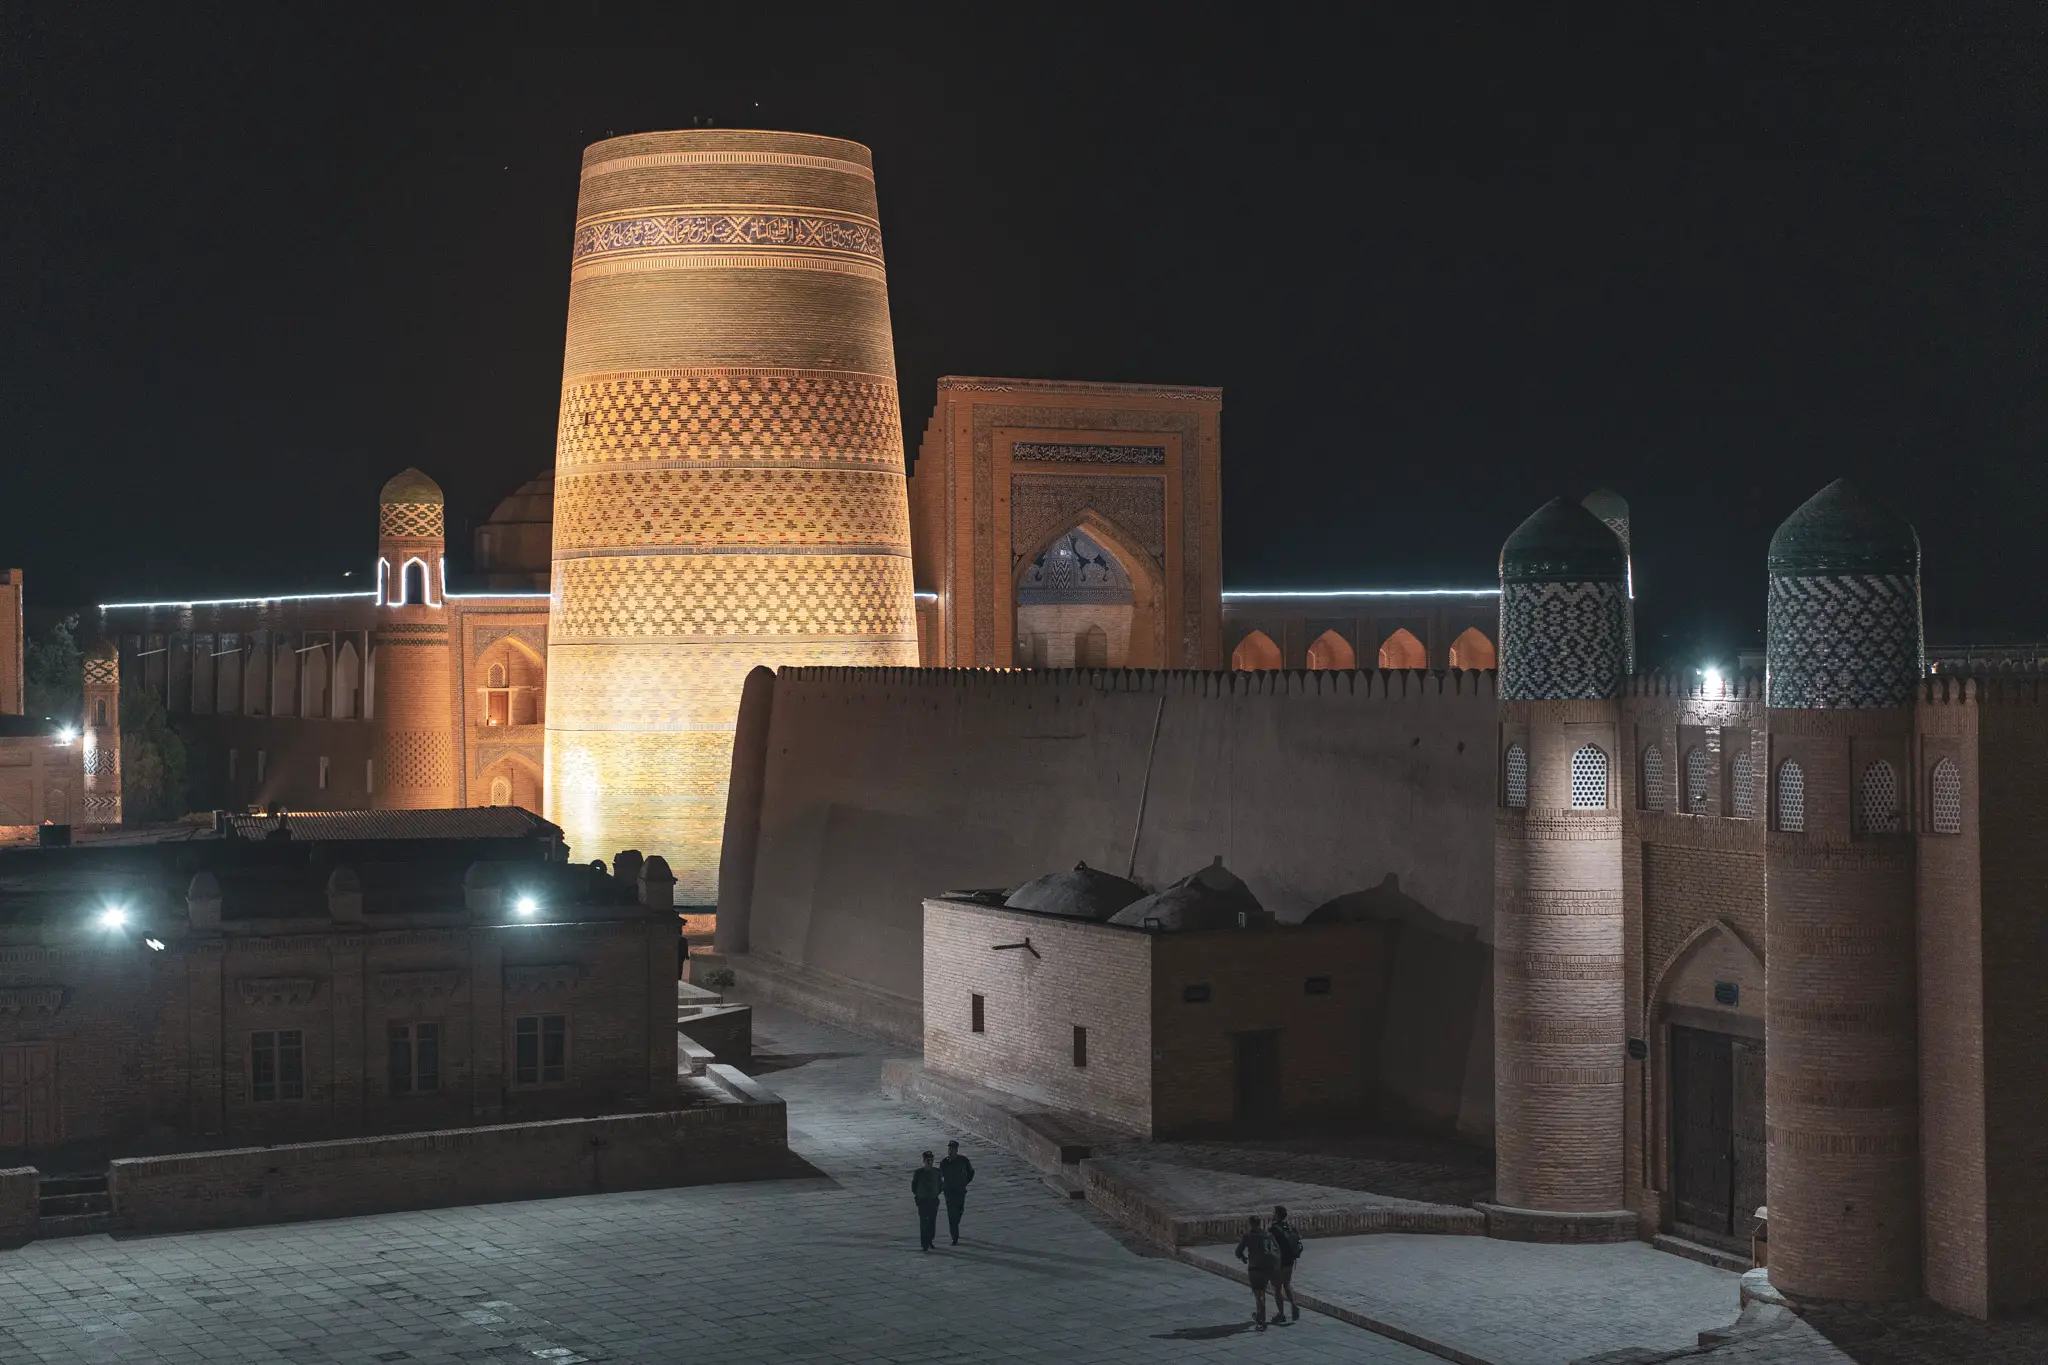 Nighttime in Khiva